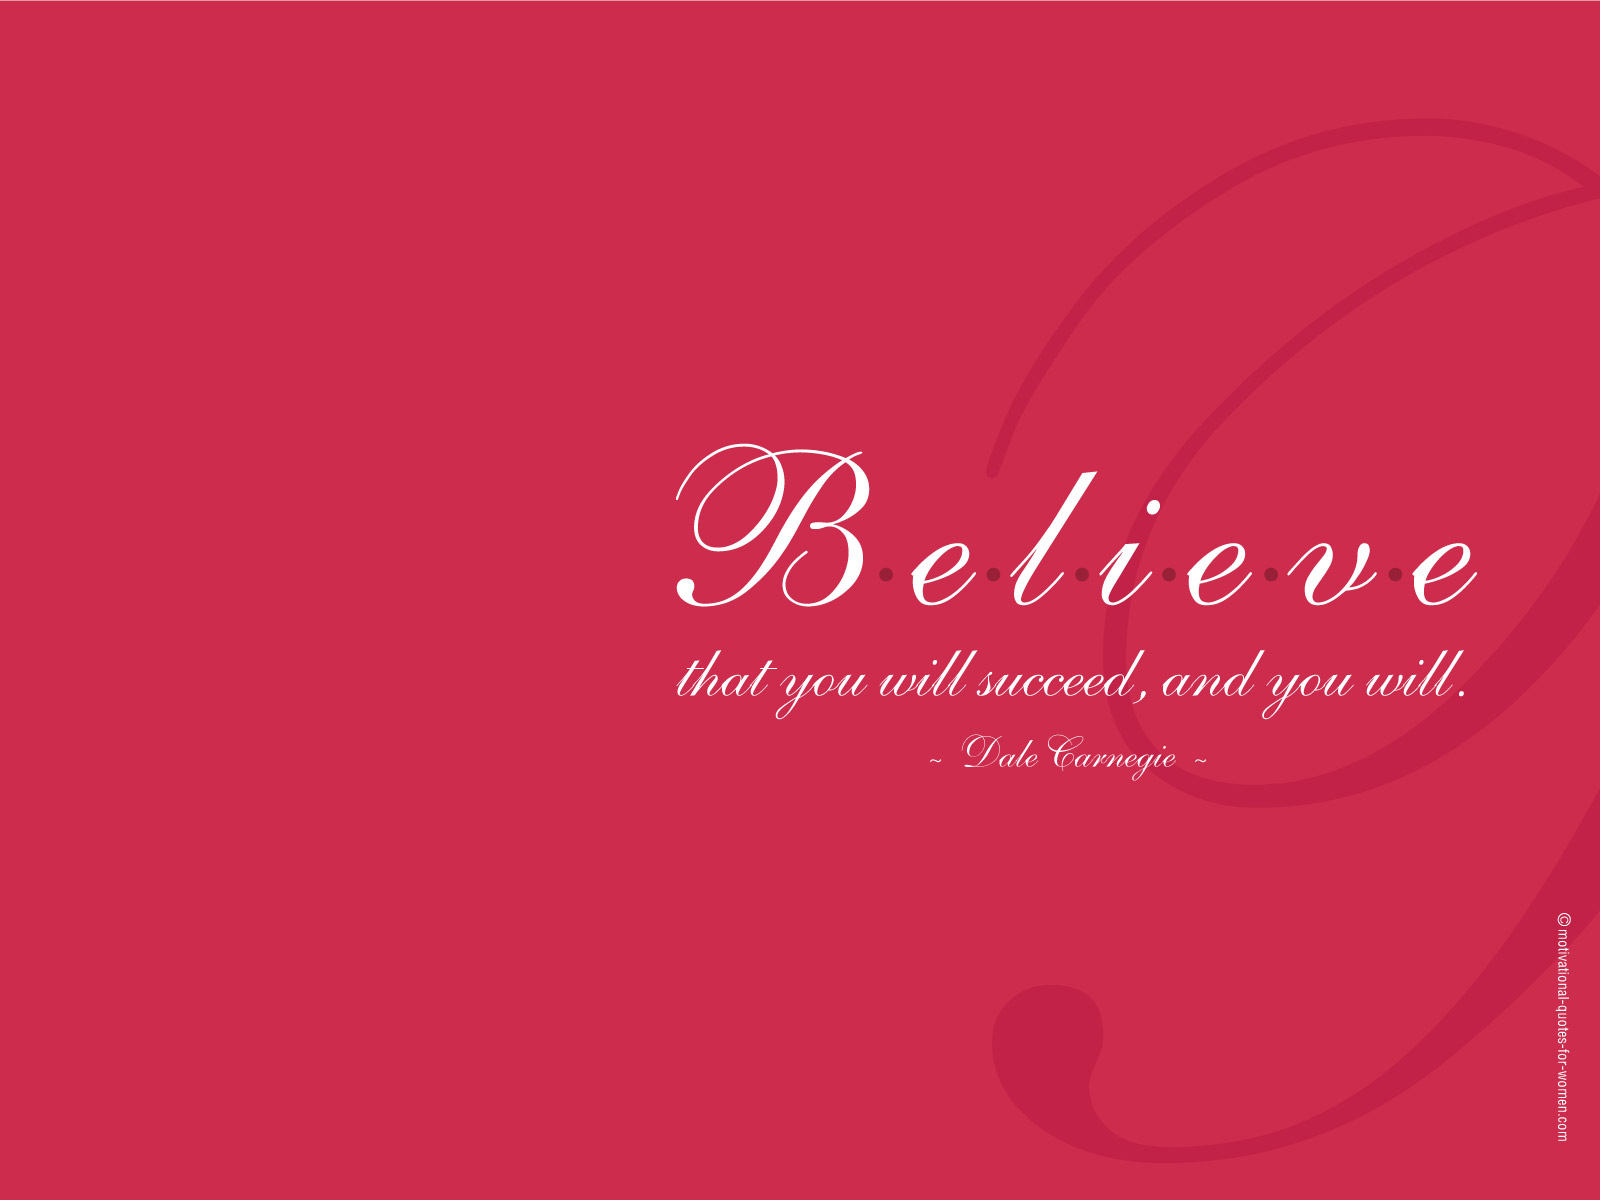 Inspirational Motivational Quotes Desktop Wallpaper QuotesGram